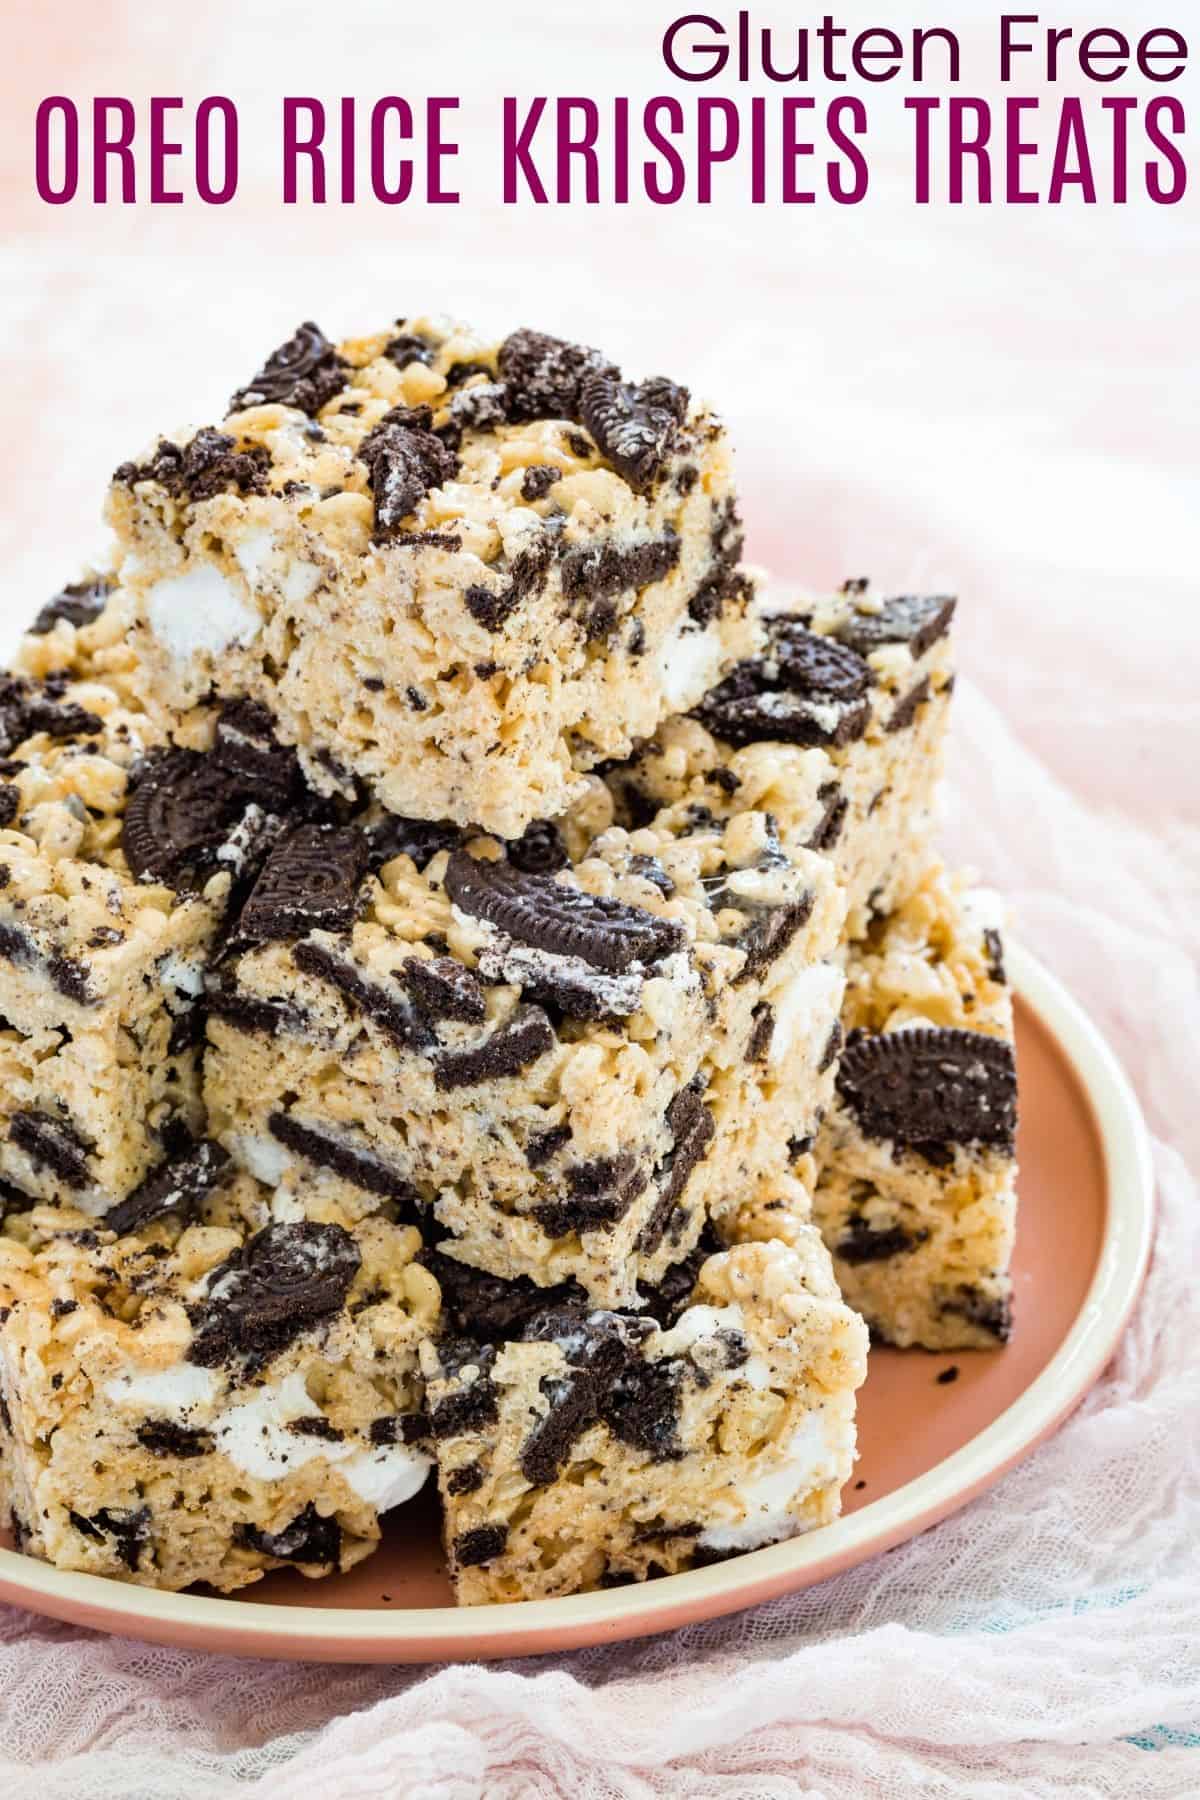 Oreo Rice Krispies Treats - Gluten Free! | Cupcakes & Kale Chips